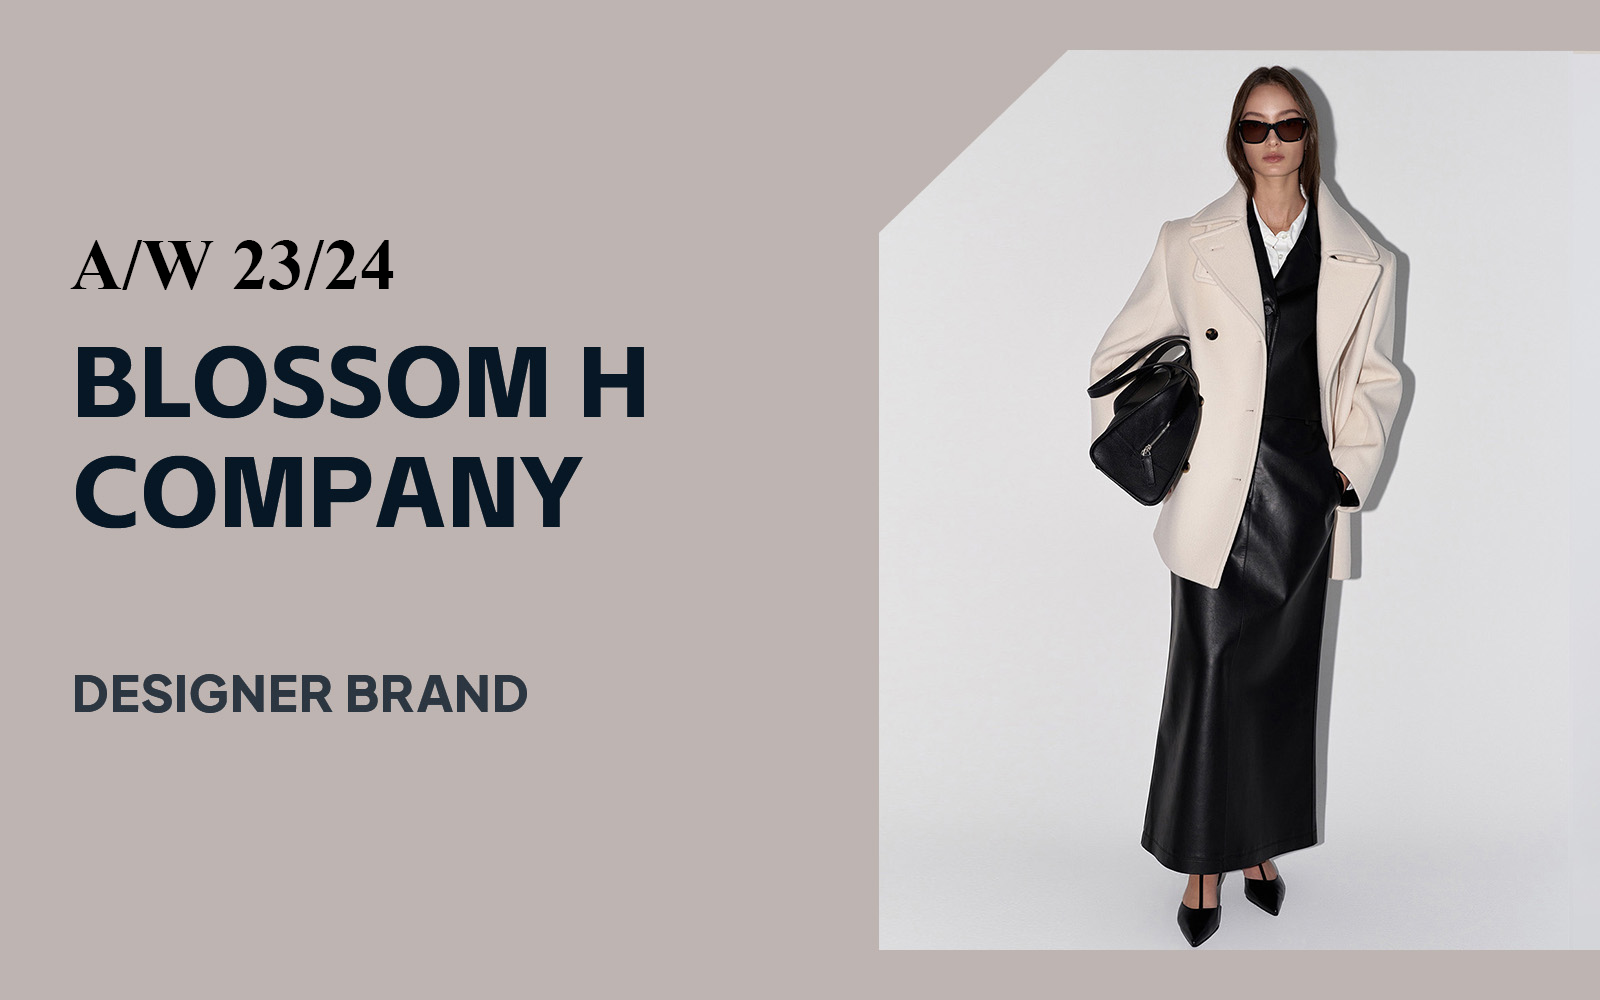 The Analysis of BLOSSOM H Company The Womenswear Designer Brand